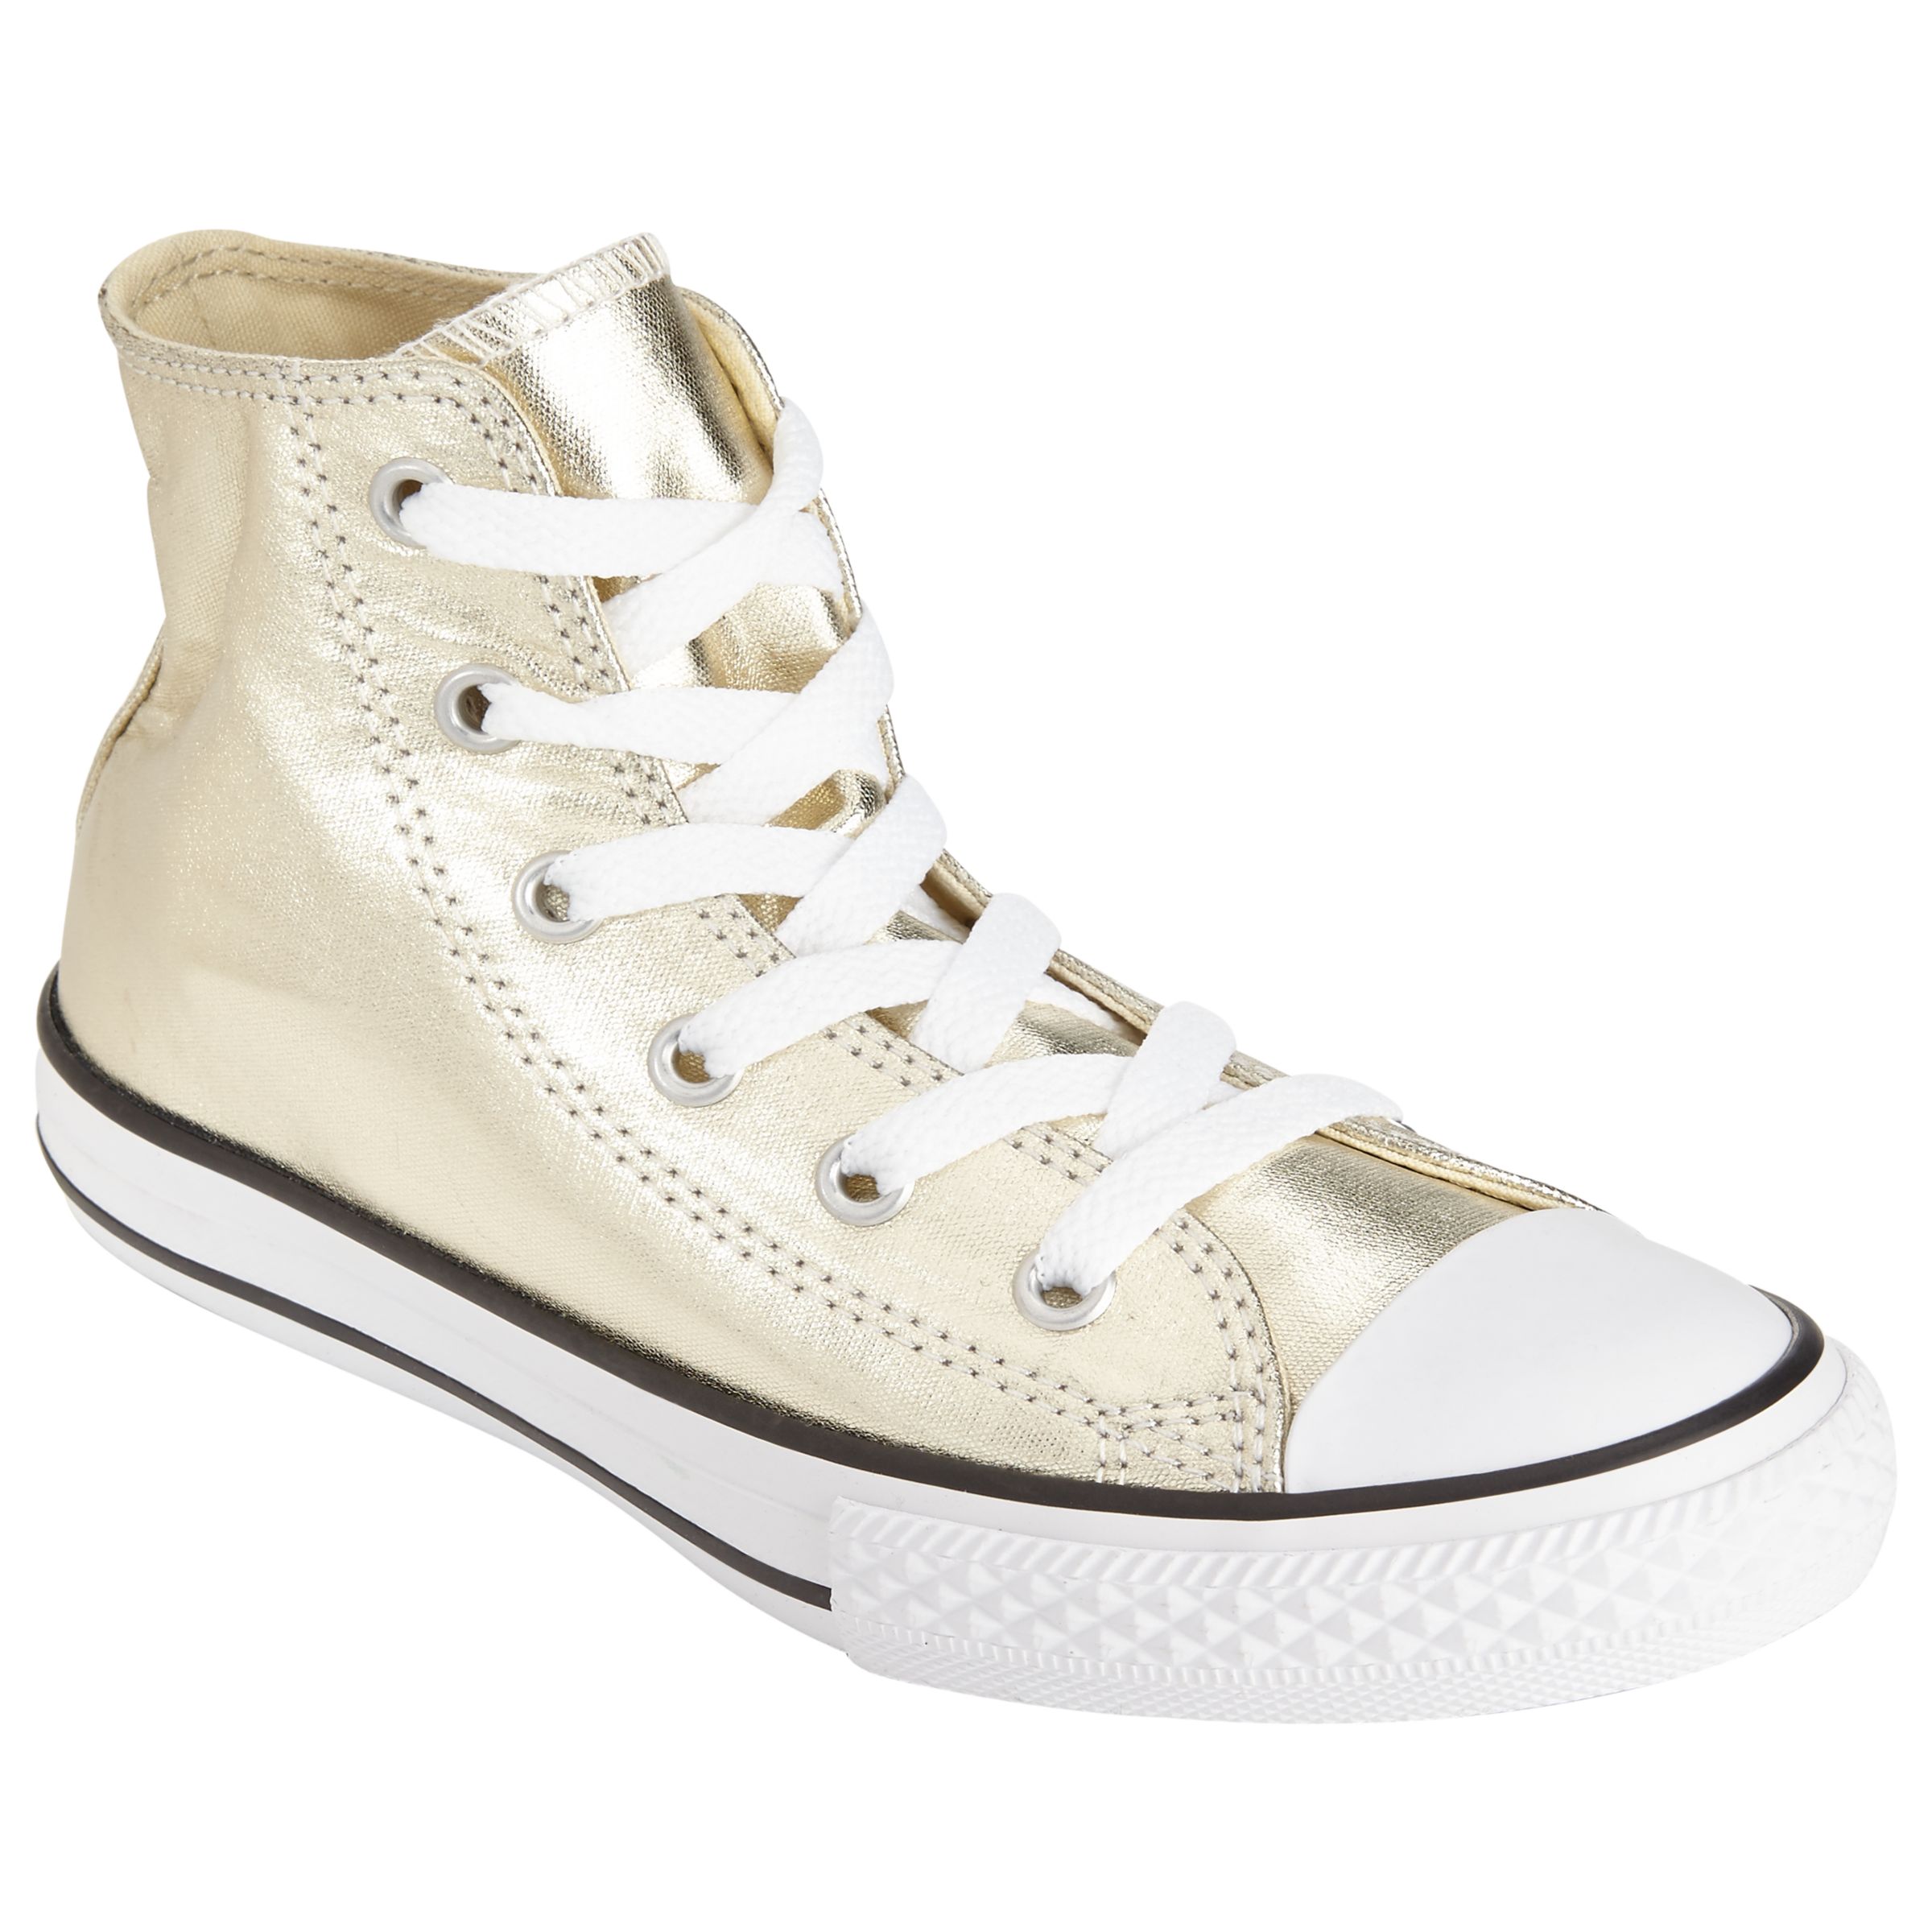 Converse Children's Hi Top Chuck Taylor Metallic Shoes, Light Gold, 11 Jnr